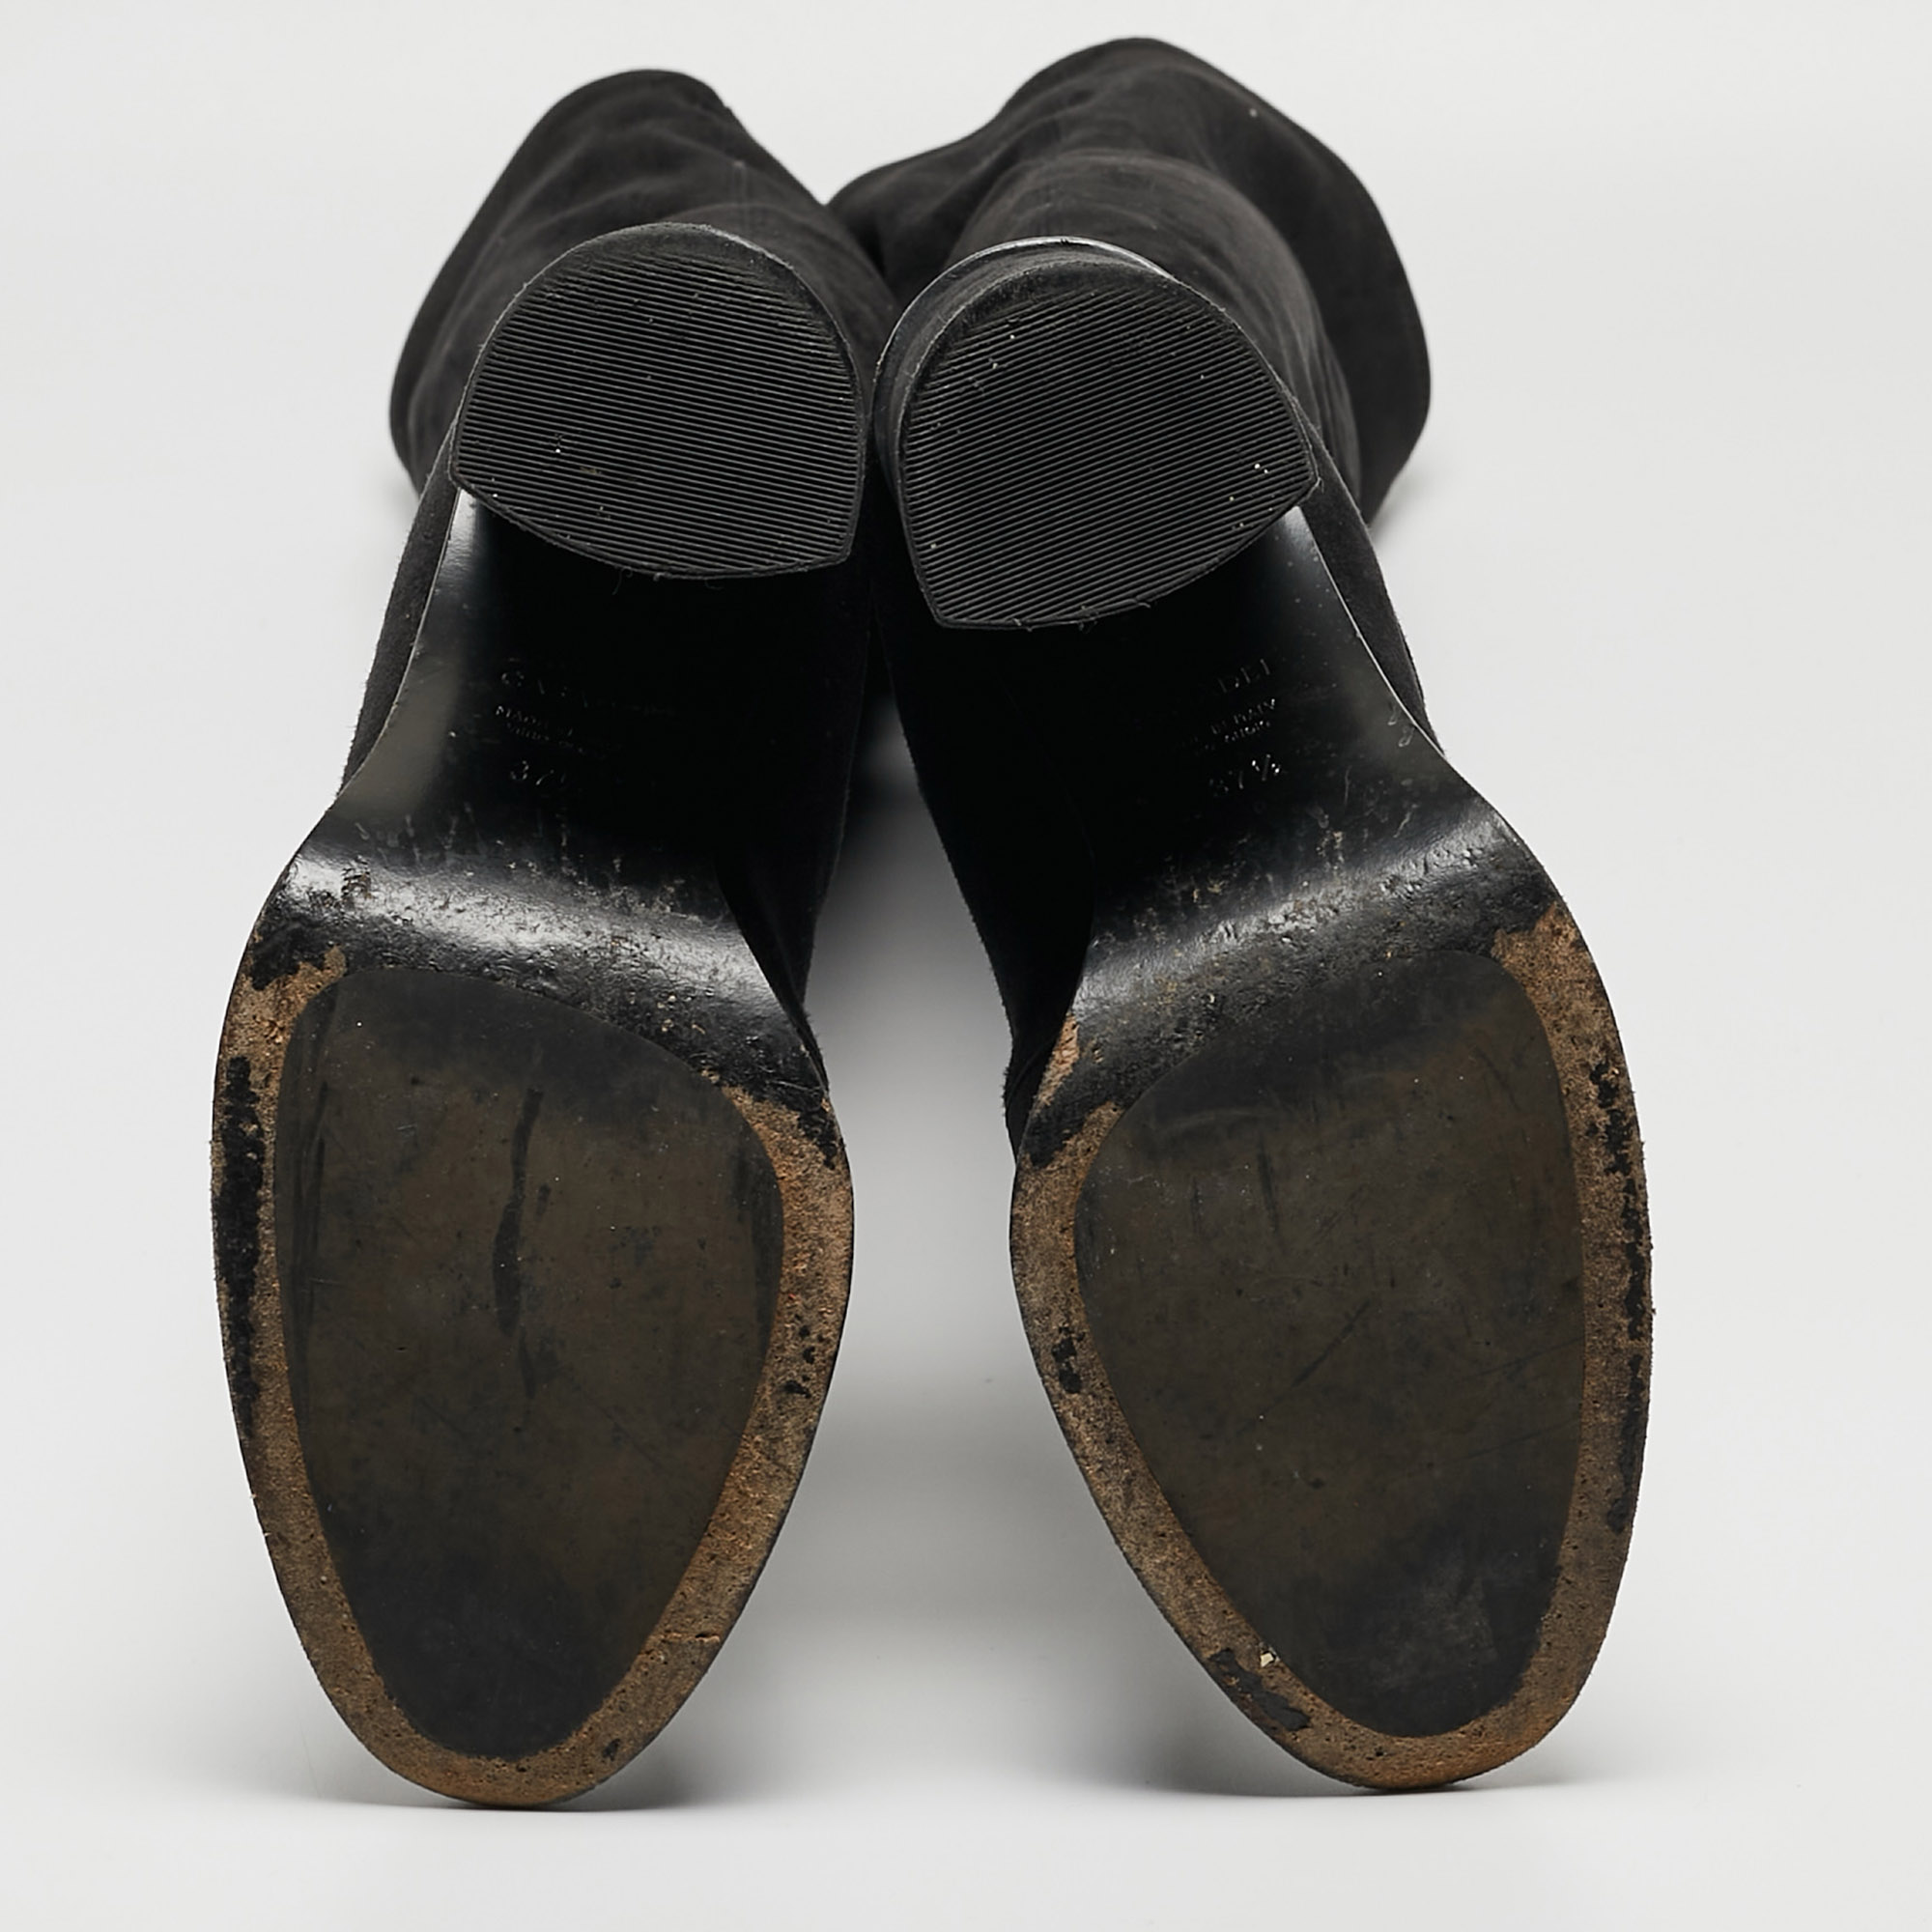 Casadei Black Suede Embellished Metal Toe Cap Knee Length Boots Size 37.5